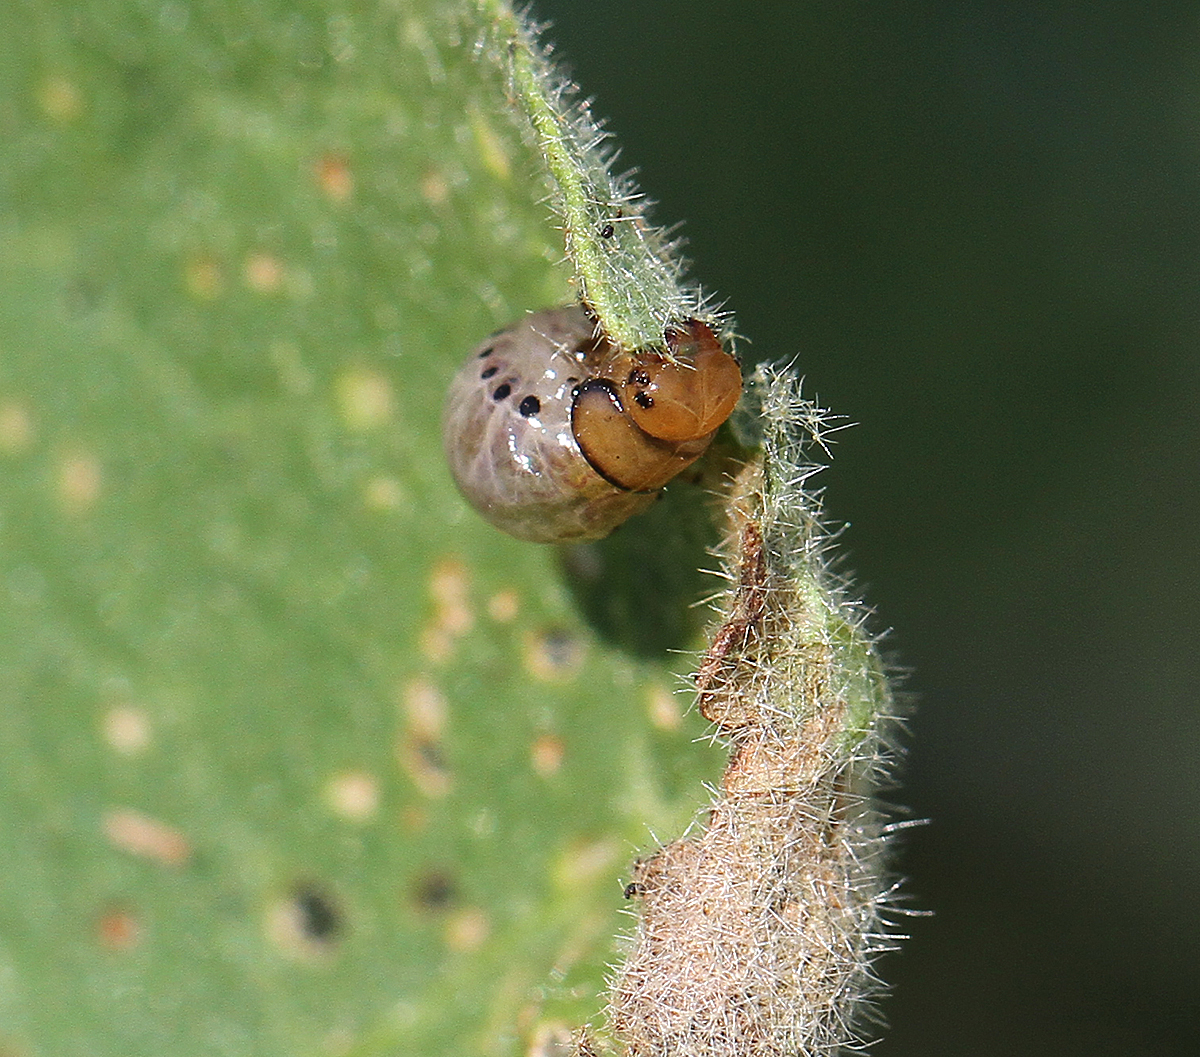 False potato beetle larva